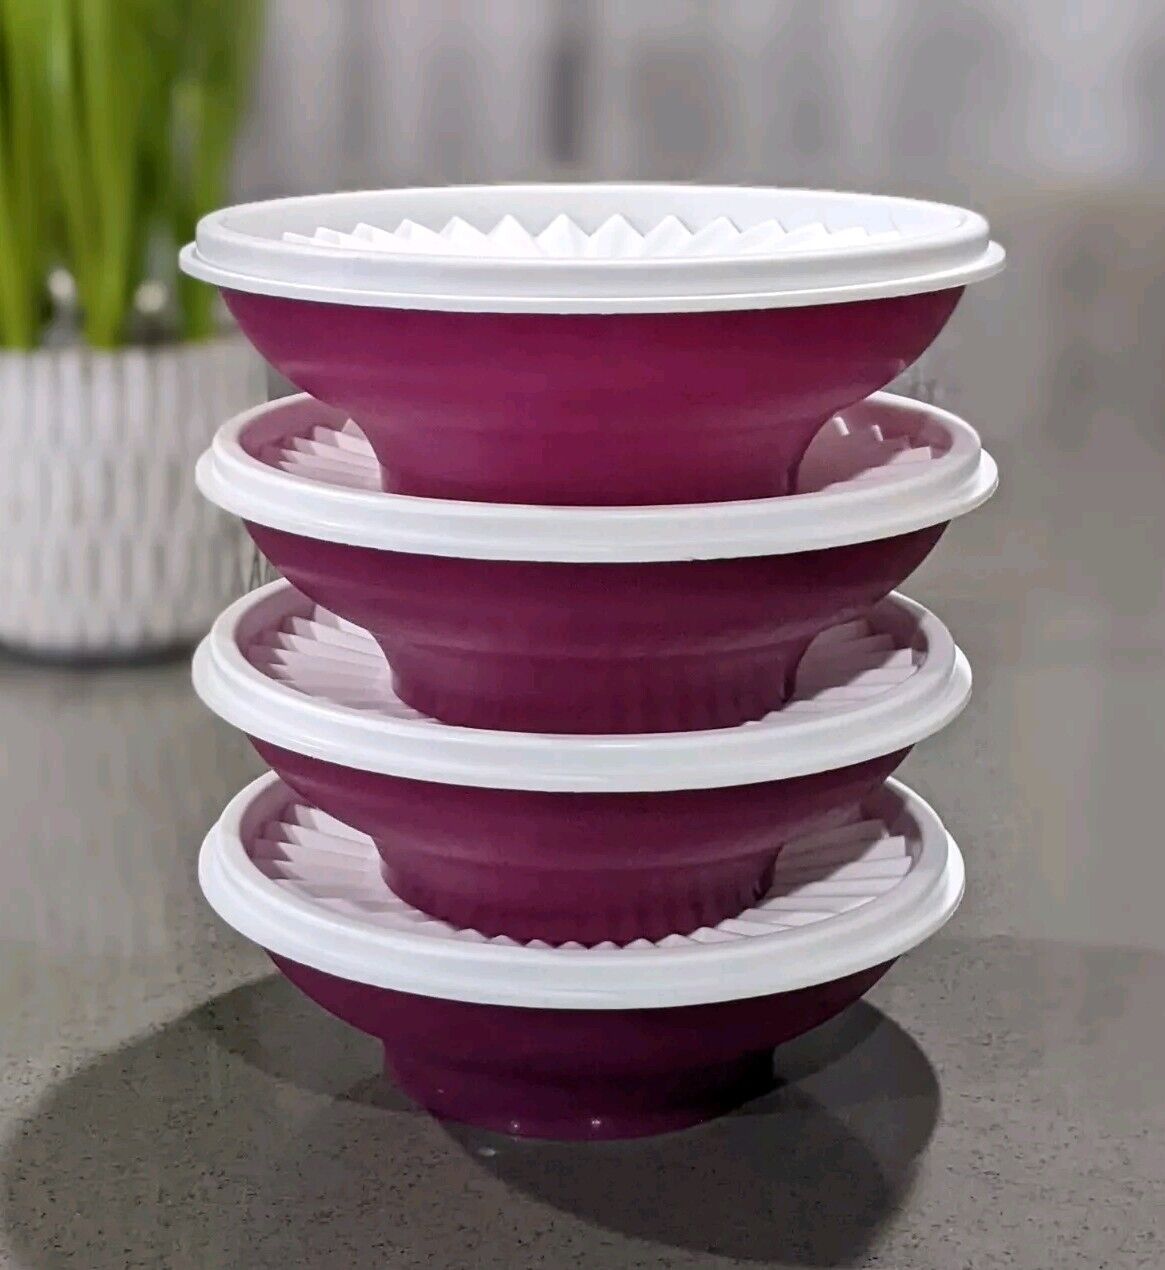 New Tupperware Servalier Salad Bowl Set of 4- Purple- 16 oz Bowls